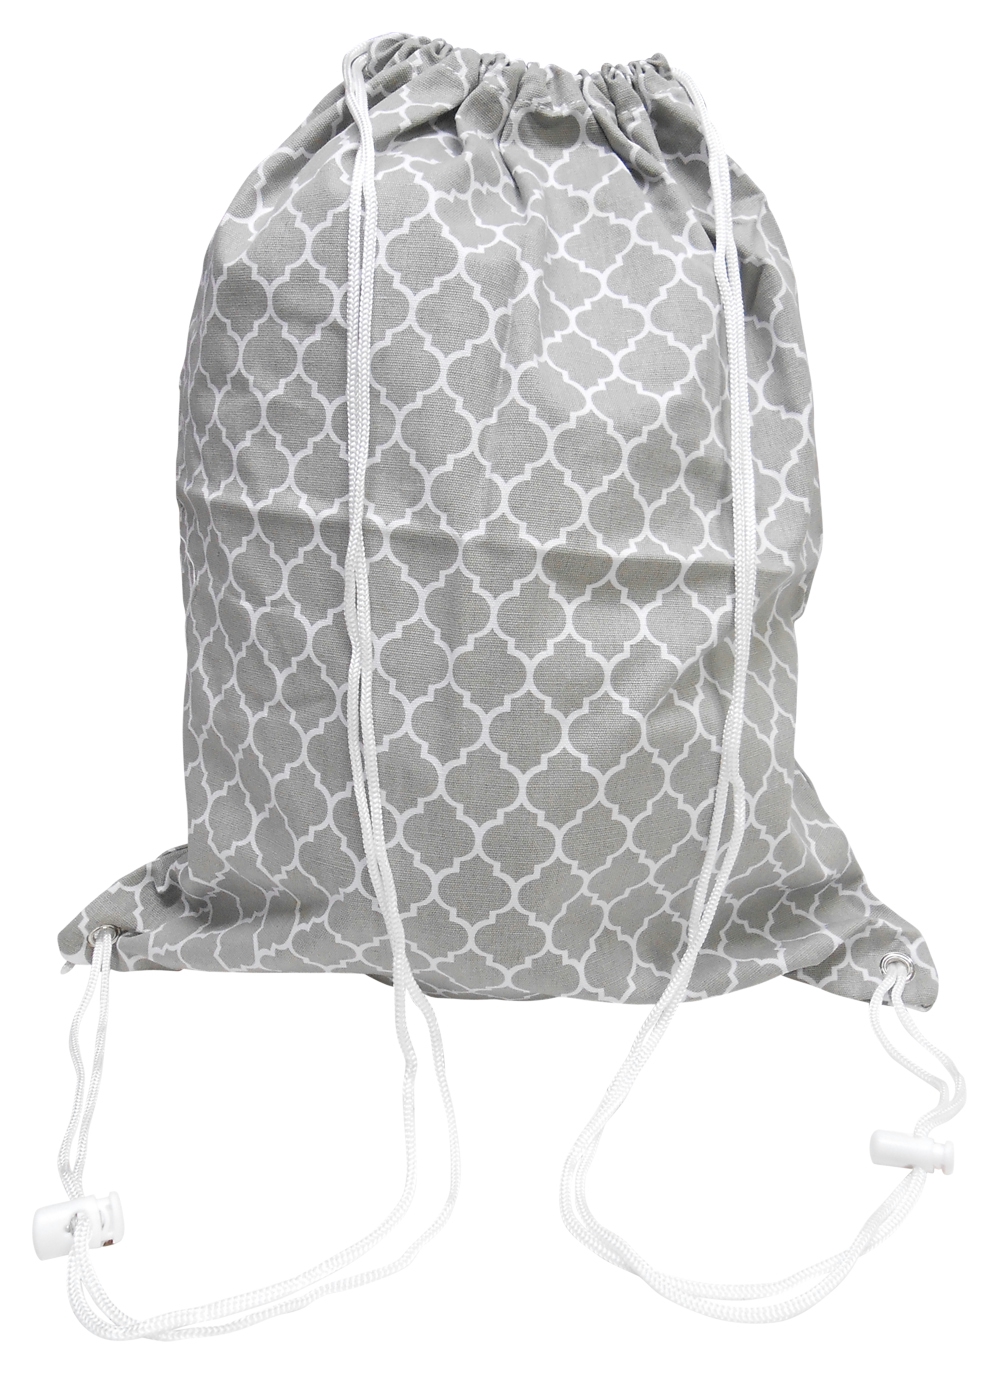 Gym Bag Drawstring Pack Embroidery Blanks in Quatrefoil Print  - GRAY